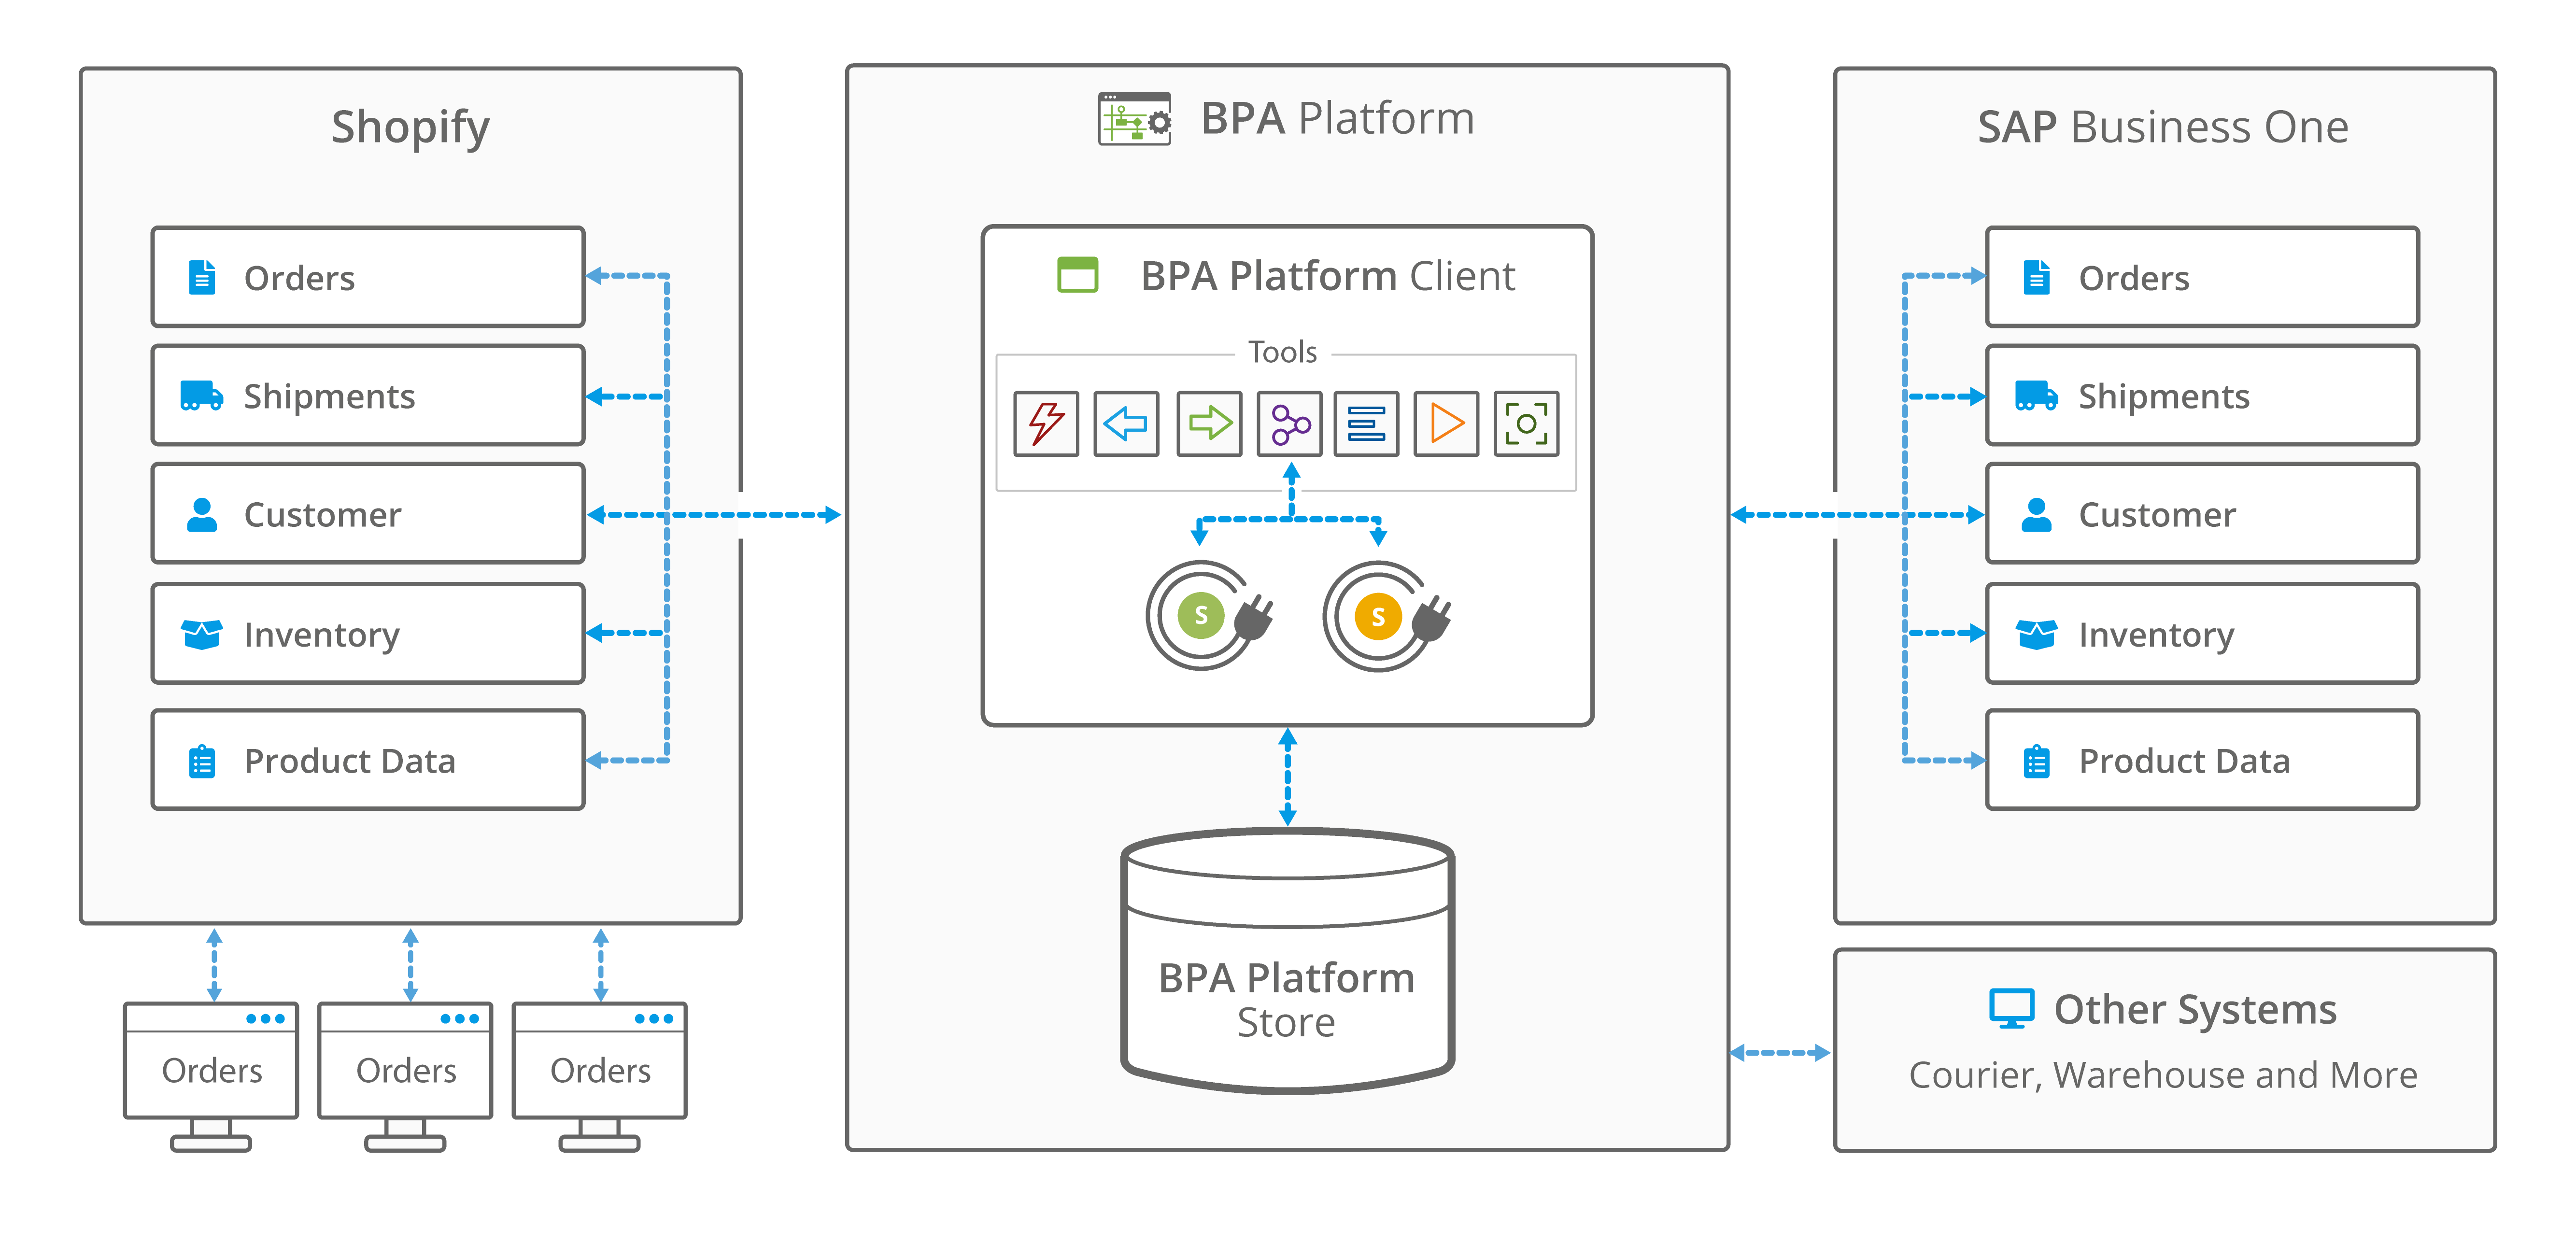 SAP Business One Shopify Integration architecture - BPA Platform